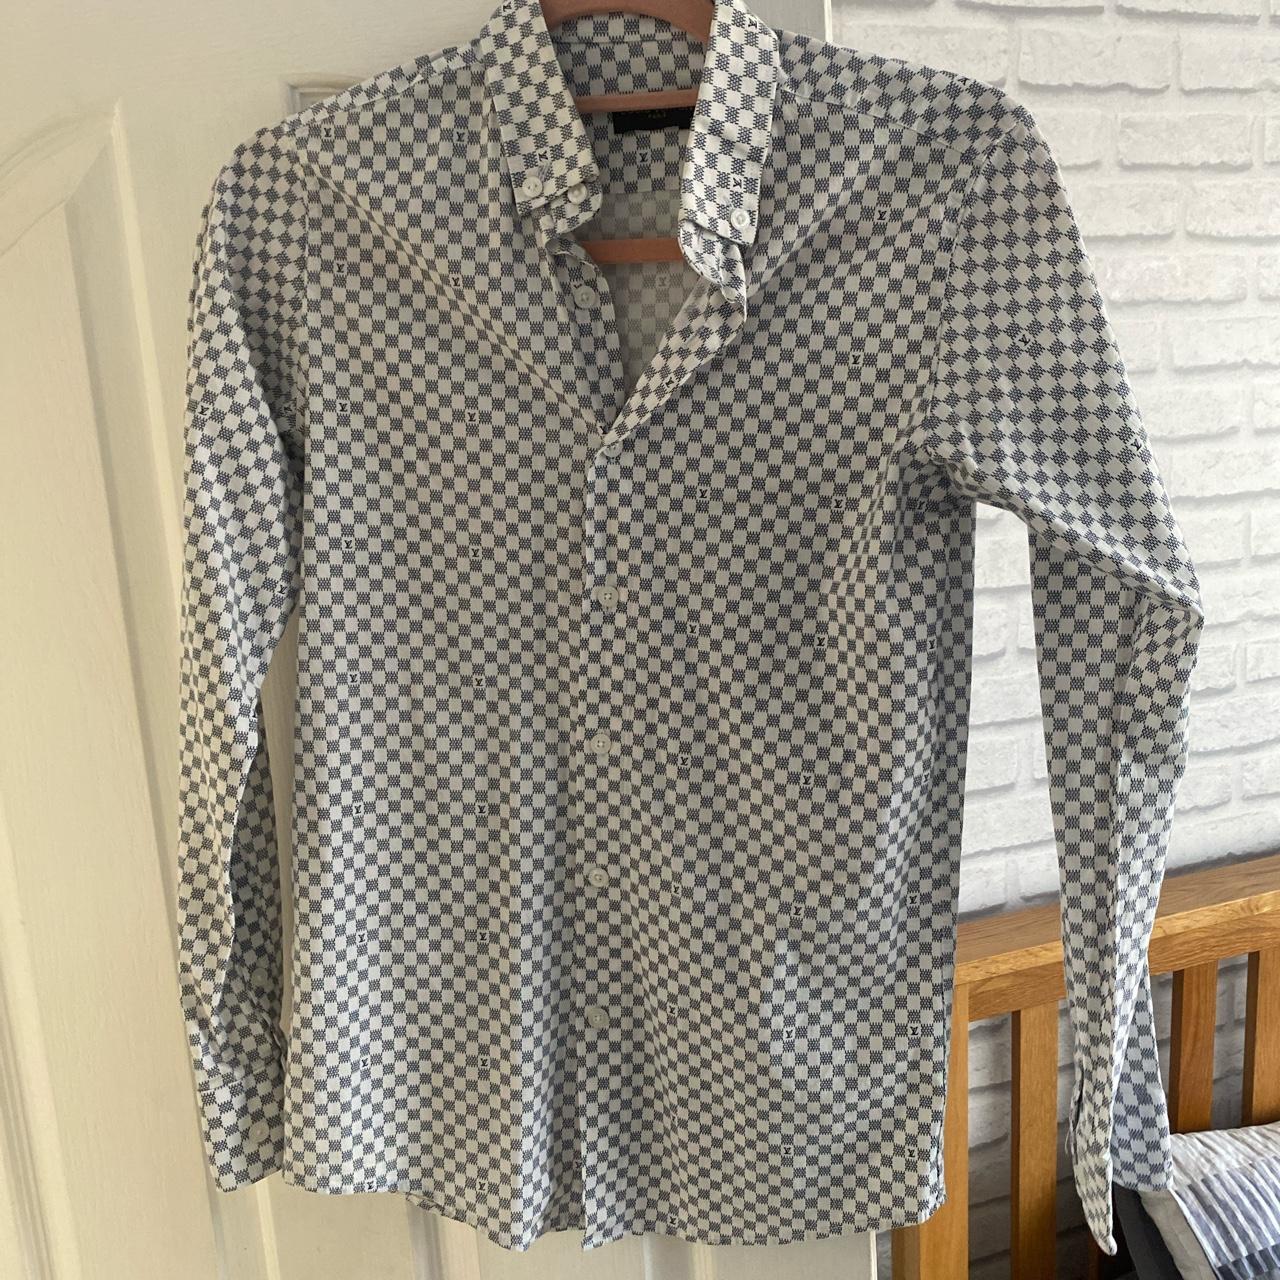 Louis Vuitton checkered shirt , Bought for around